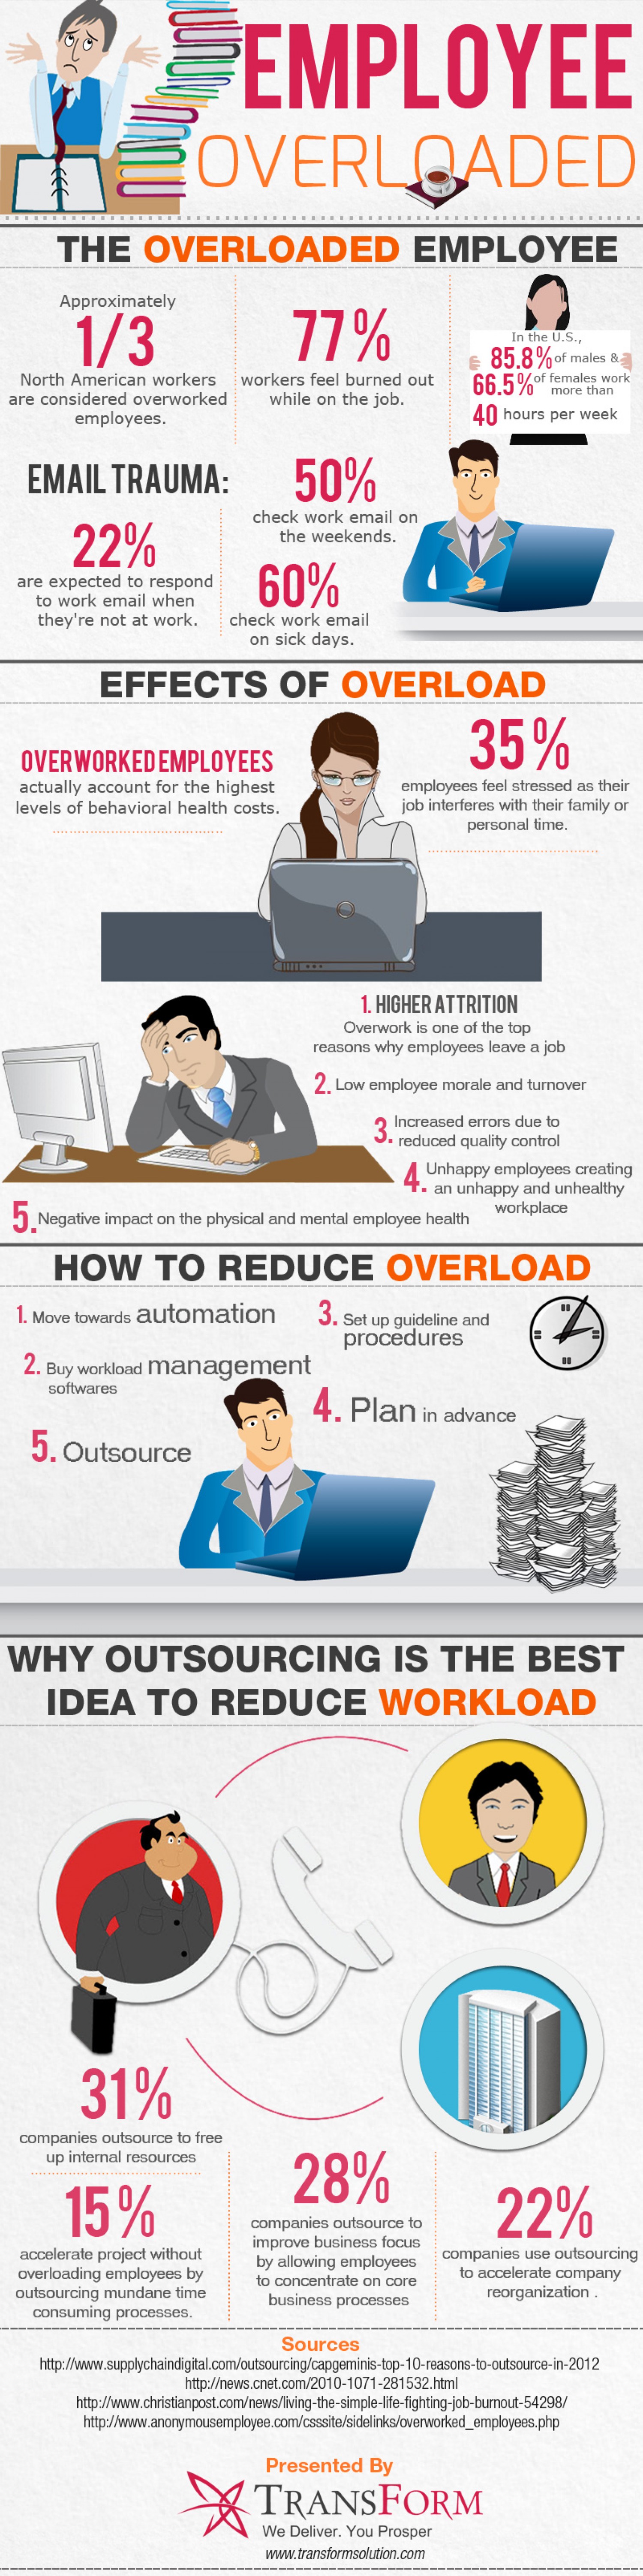 employee overload infographic